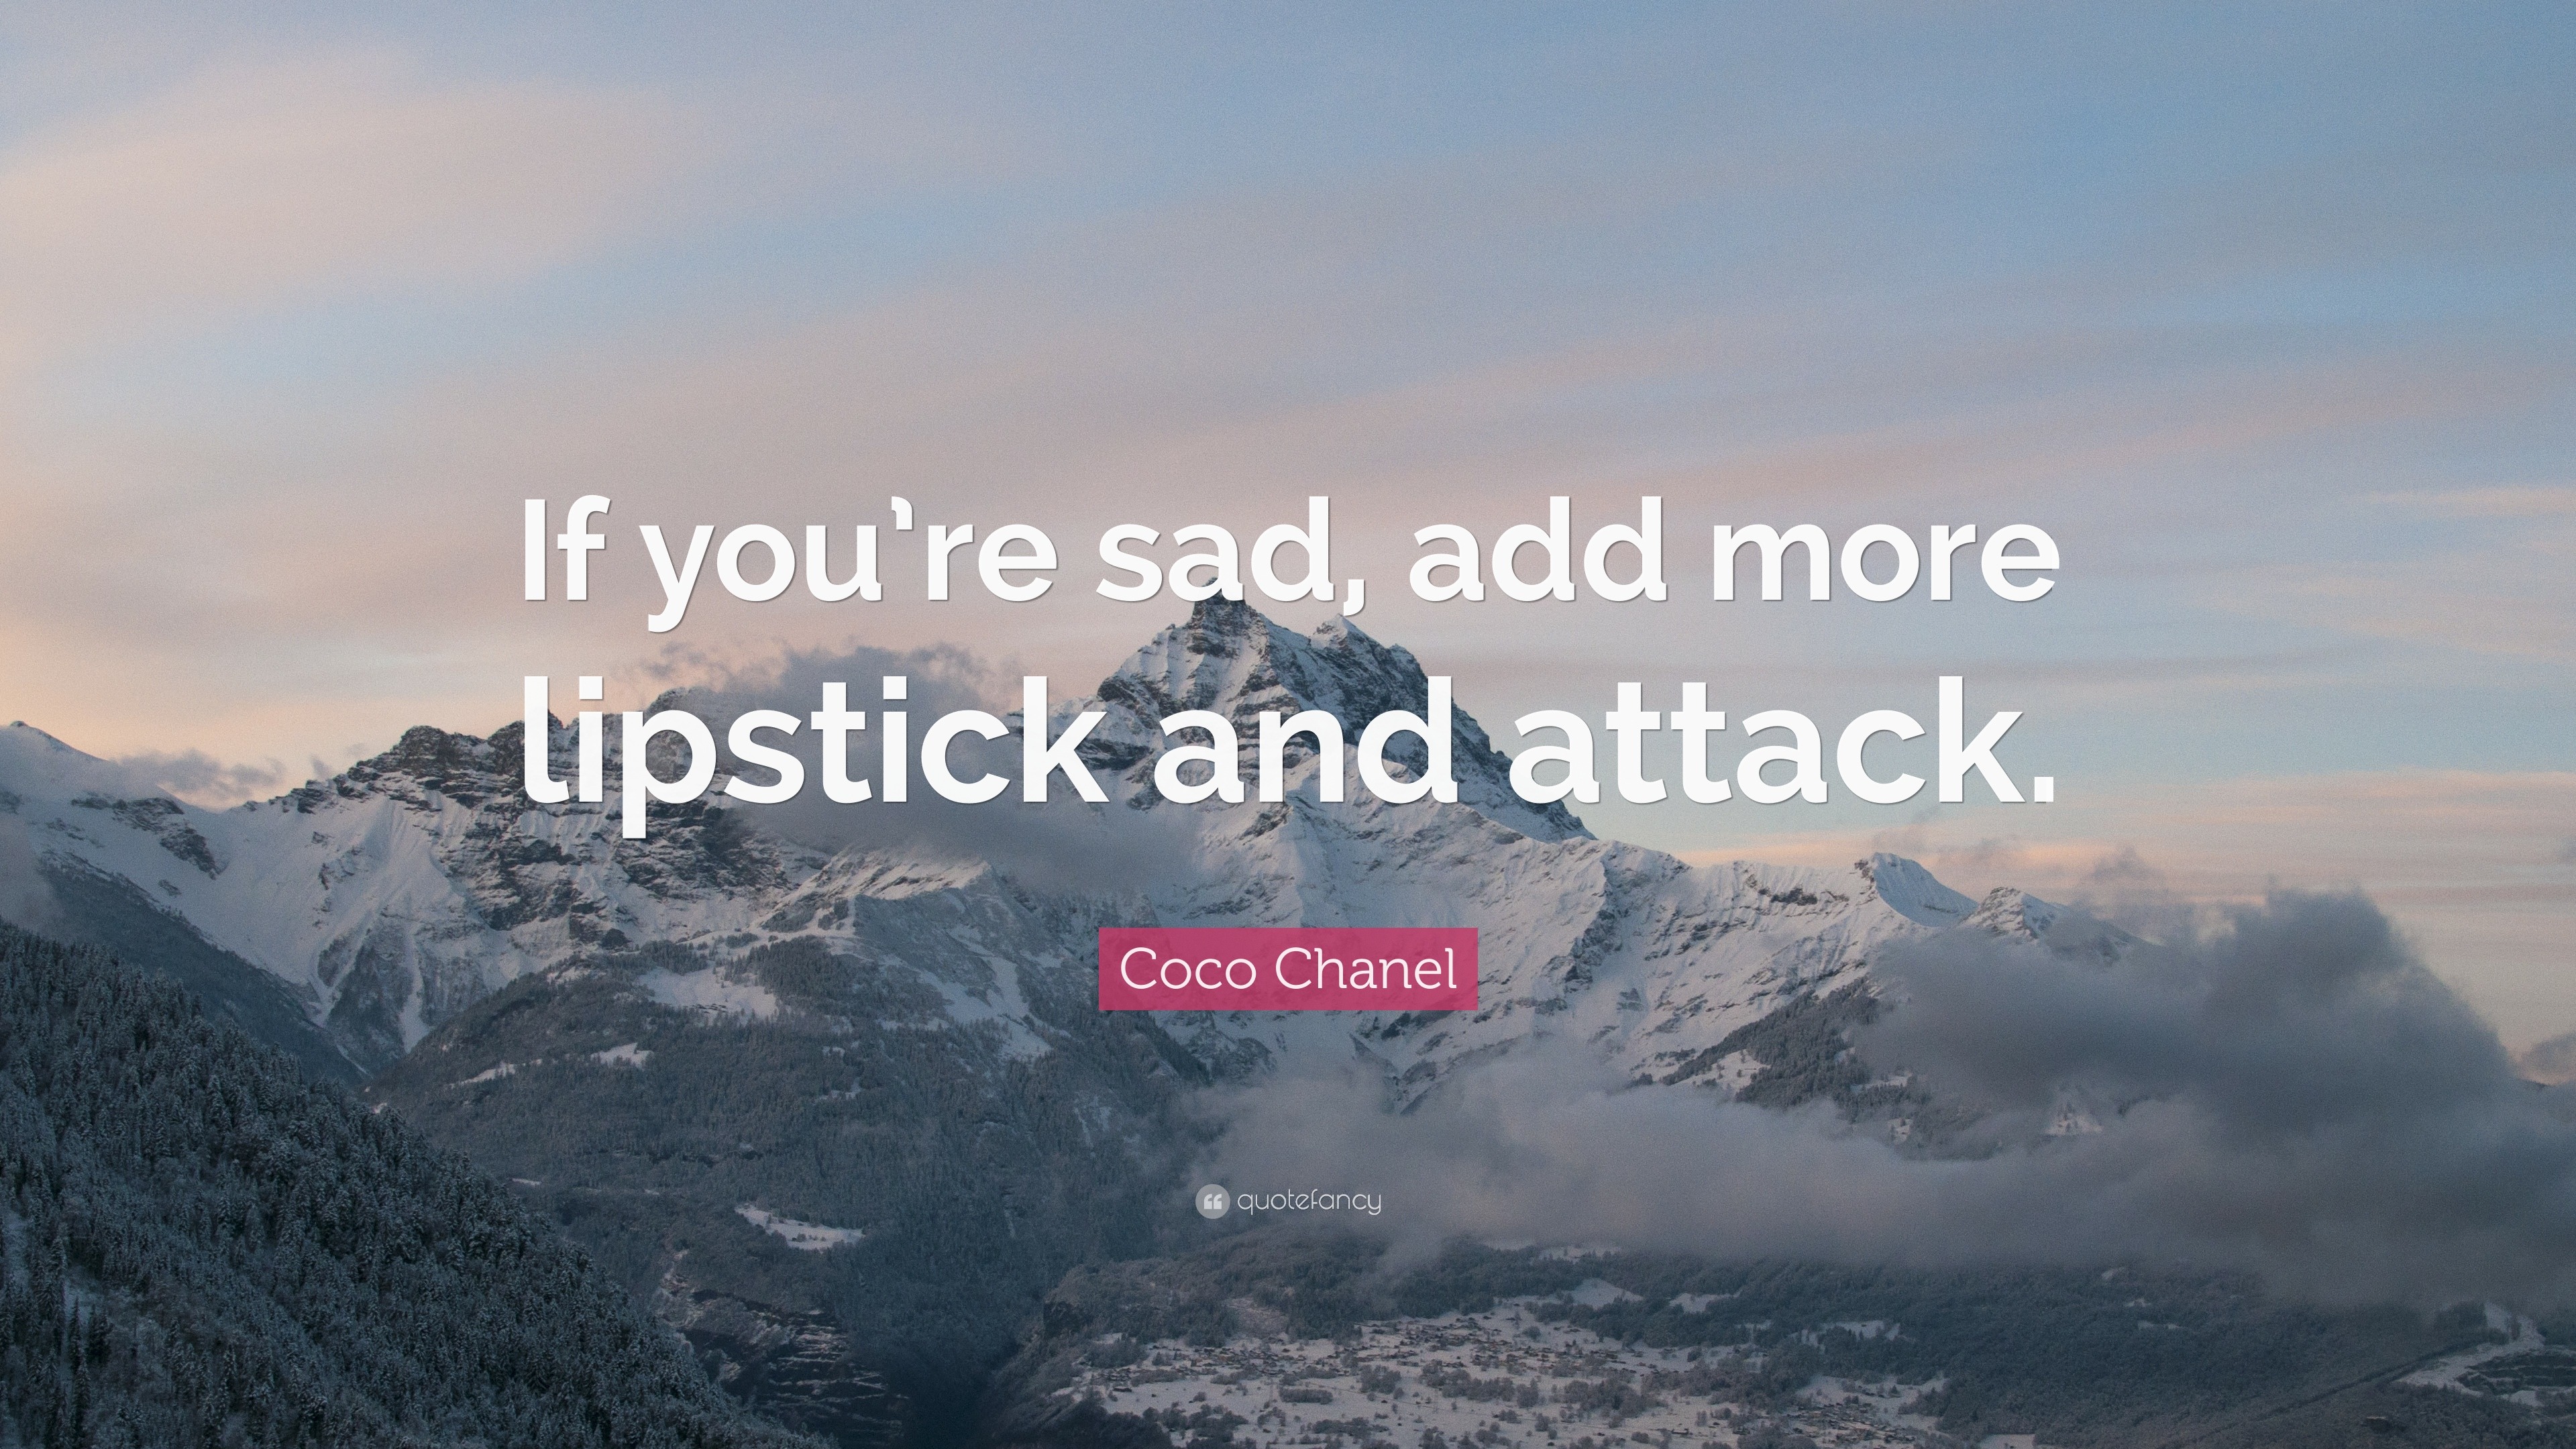 Coco Chanel Quote: “If you're sad, add more lipstick and attack.”